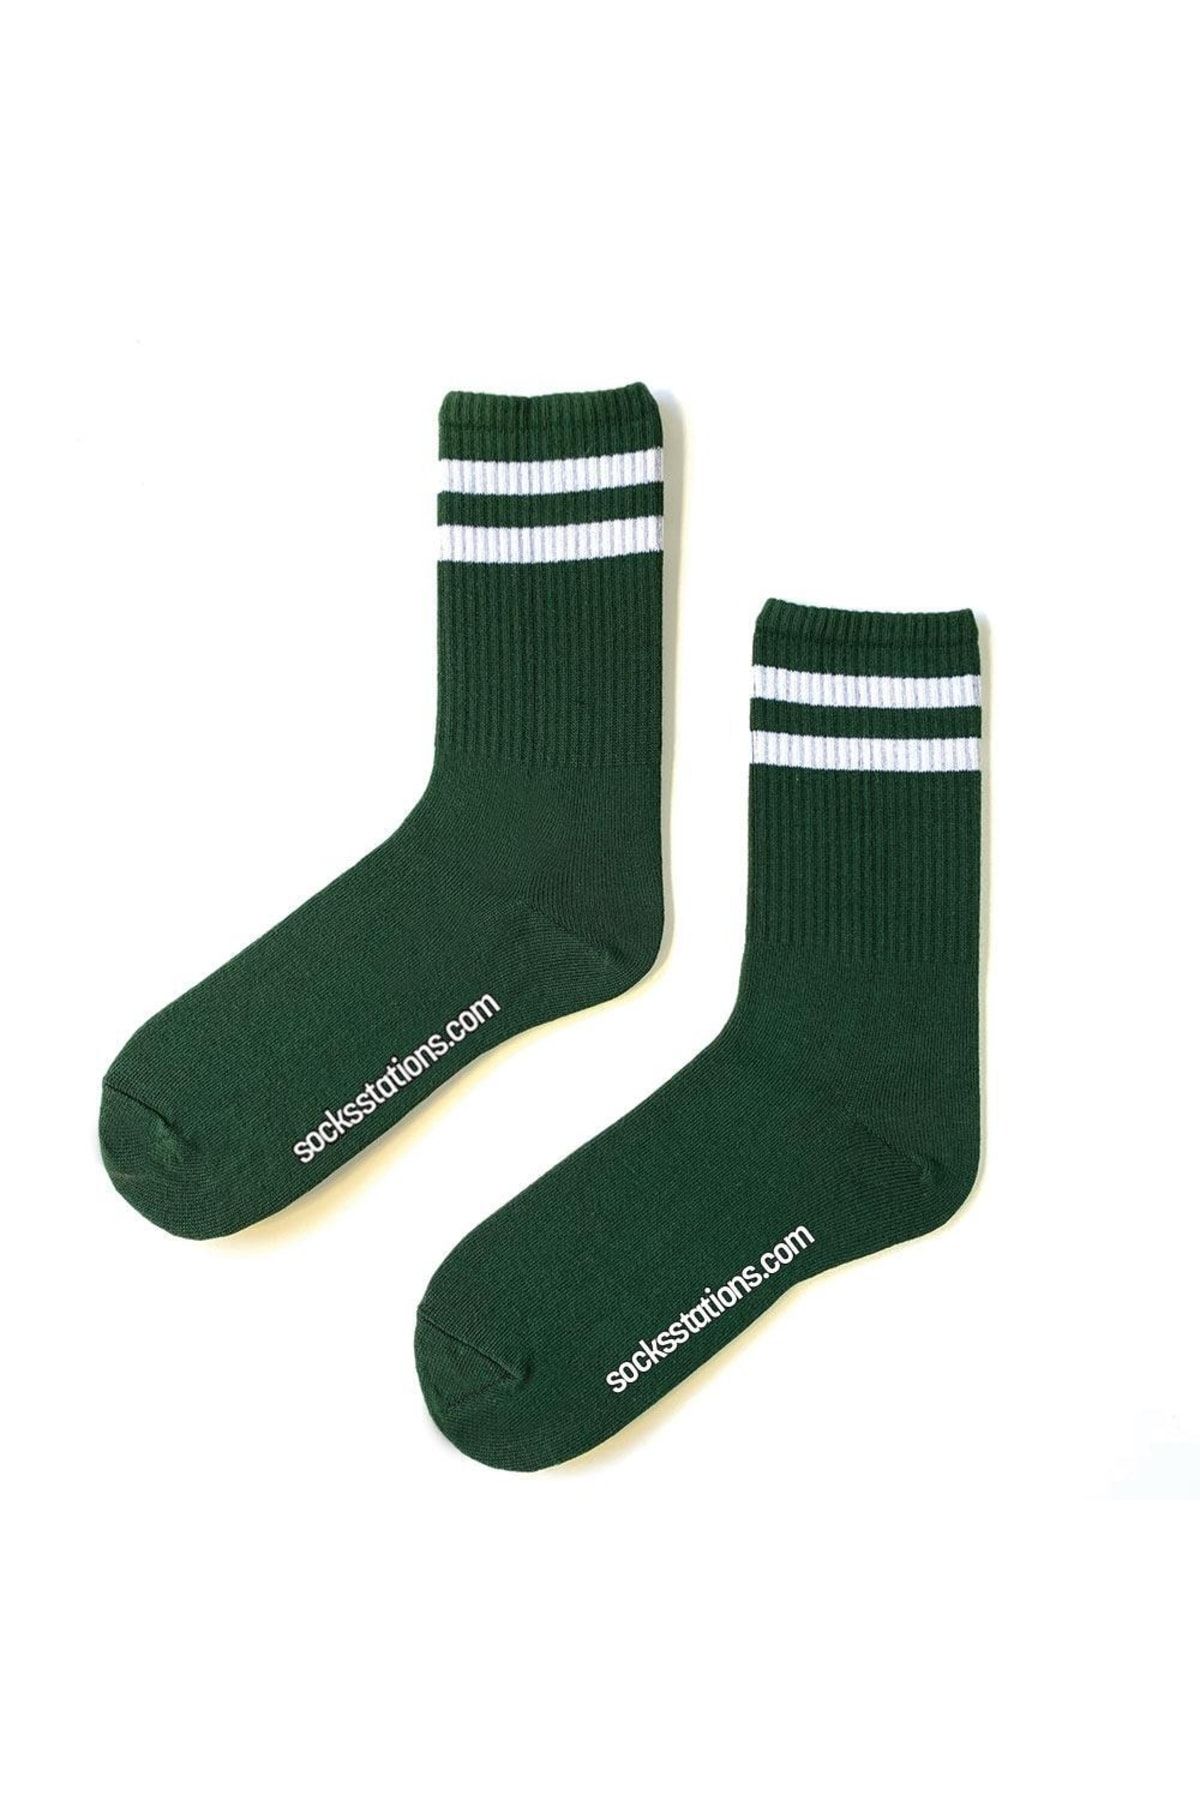 Socks Stations Ünisex Yeşil Renkli , Beyaz Çizgili Uzun Kolej Spor Çorap